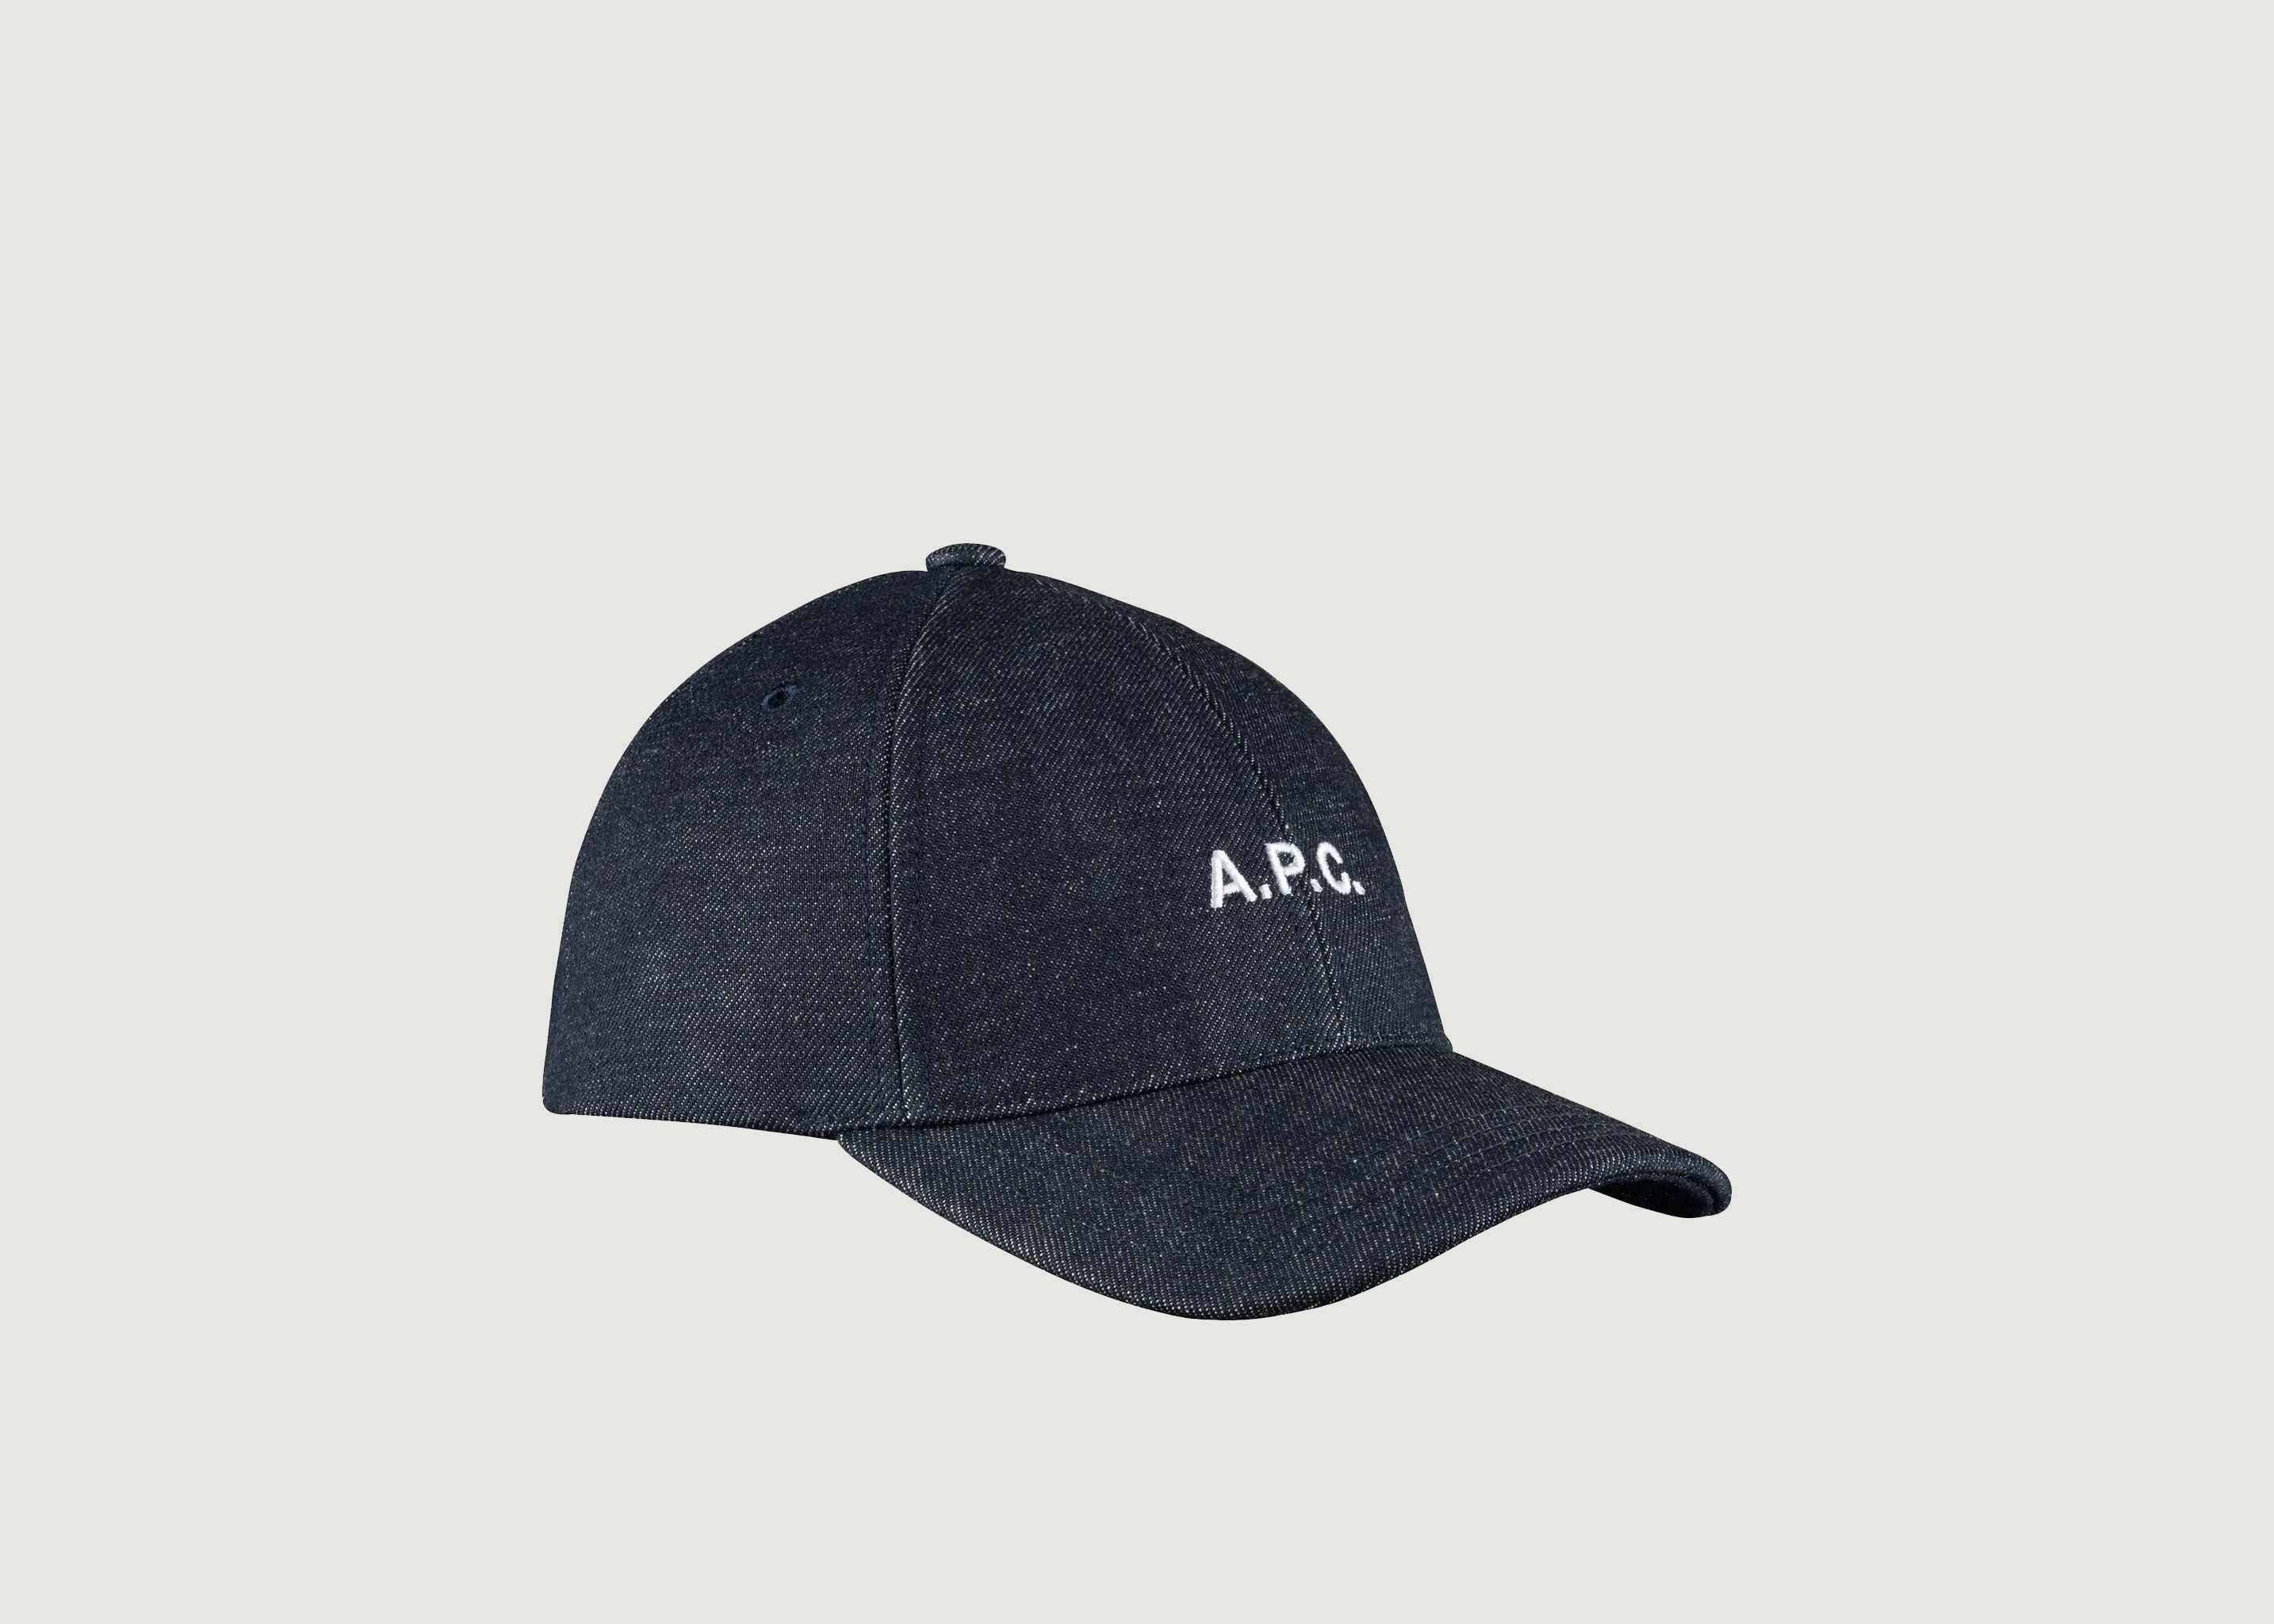 Charlie cap with logo - A.P.C.